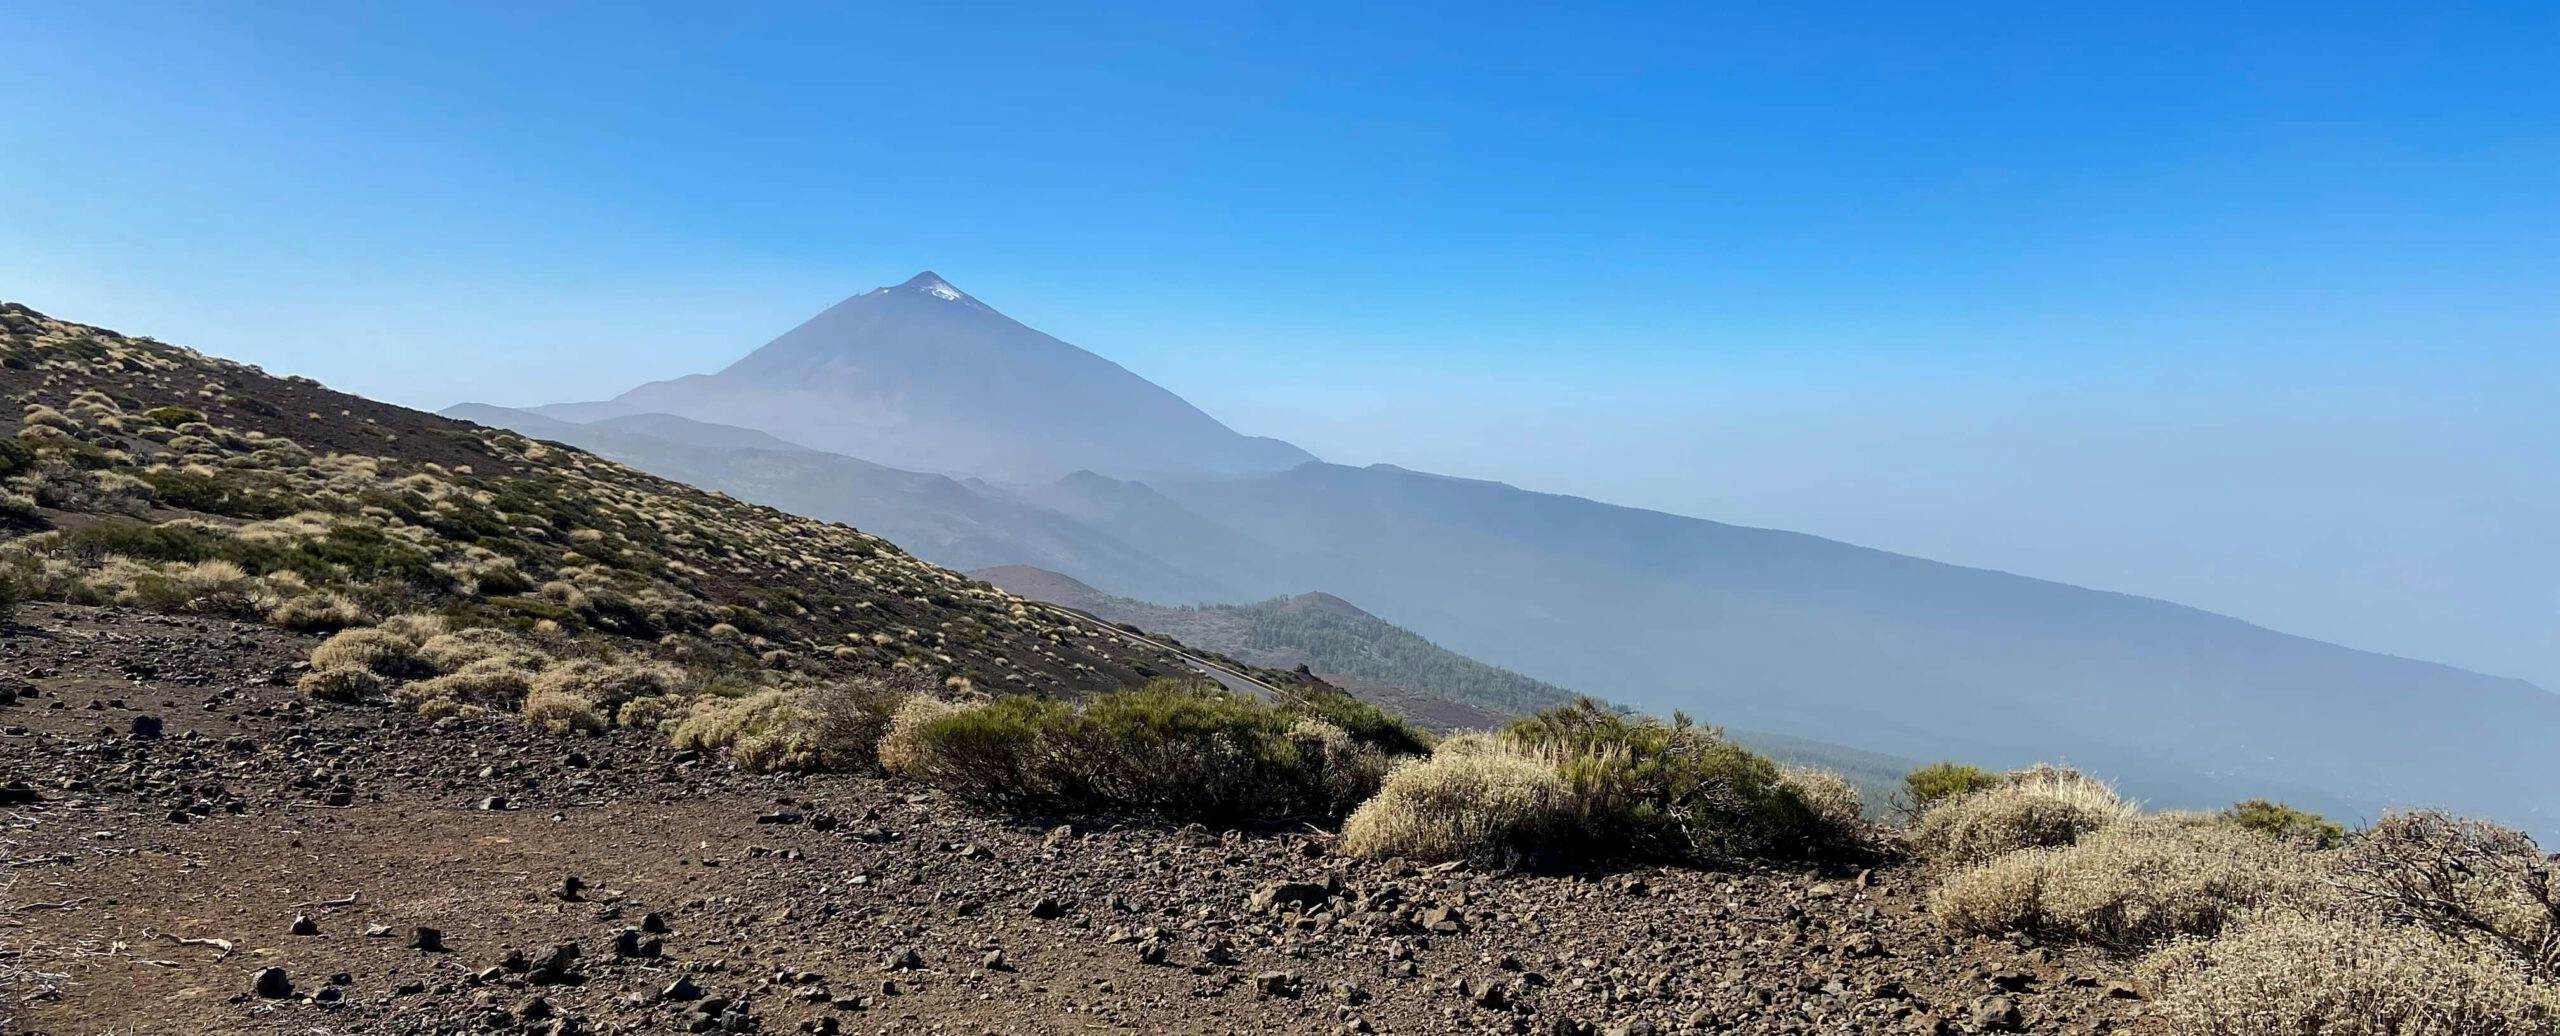 Vista del Teide desde la ruta de senderismo en la Cumbre Dorsal de Tenerife